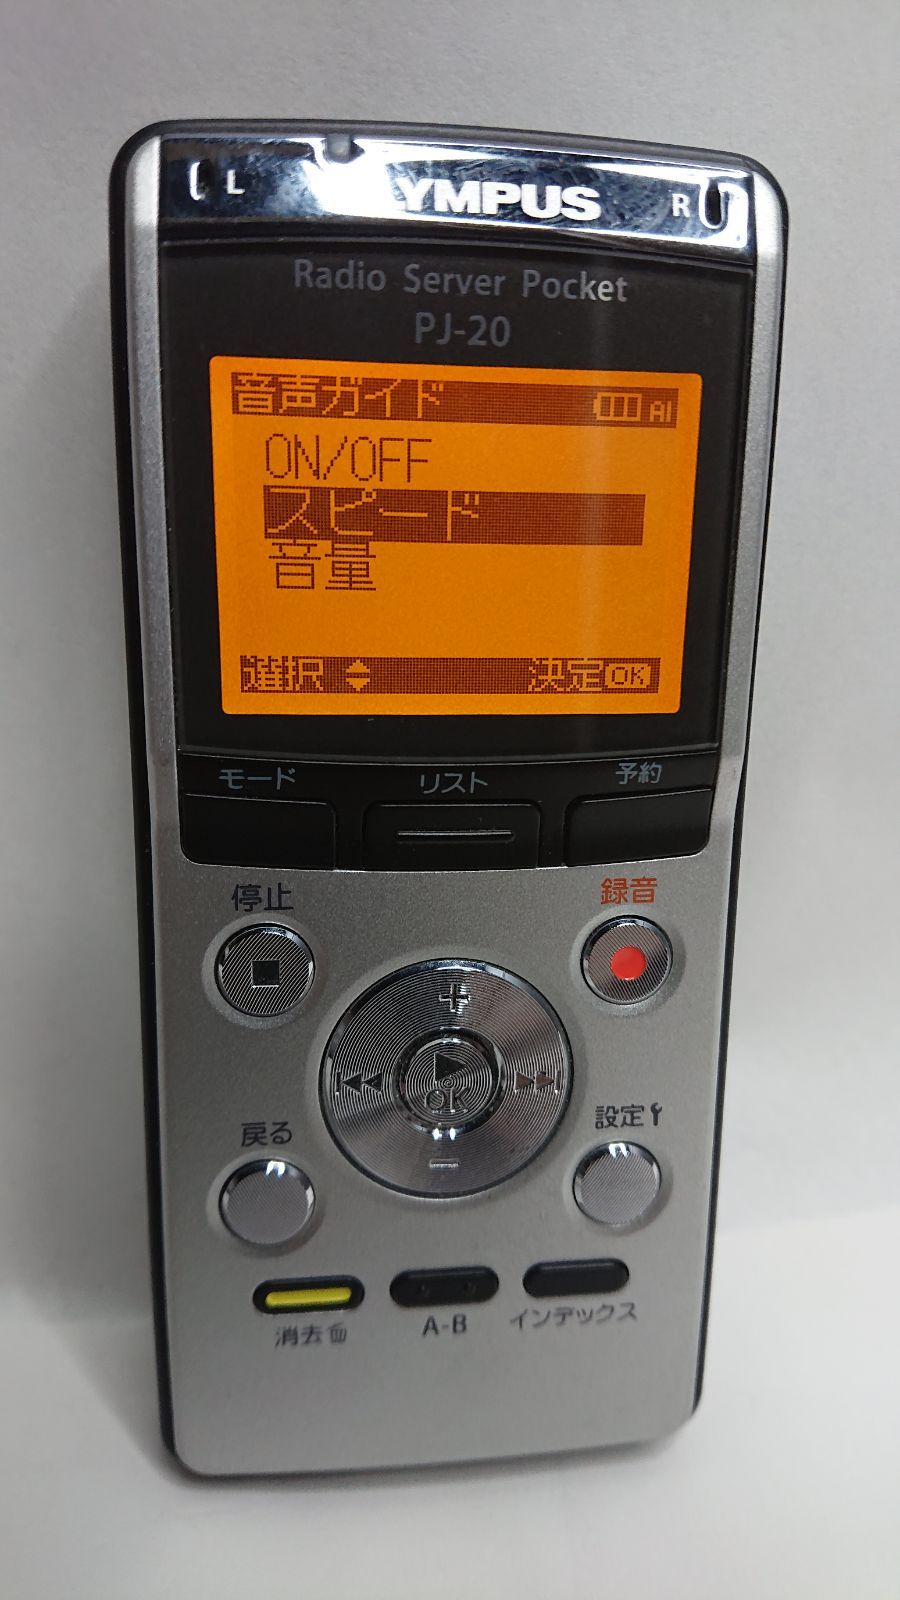 OLYMPUS ICレコーダー機能付ラジオ録音機 ラジオサーバーポケット PJ